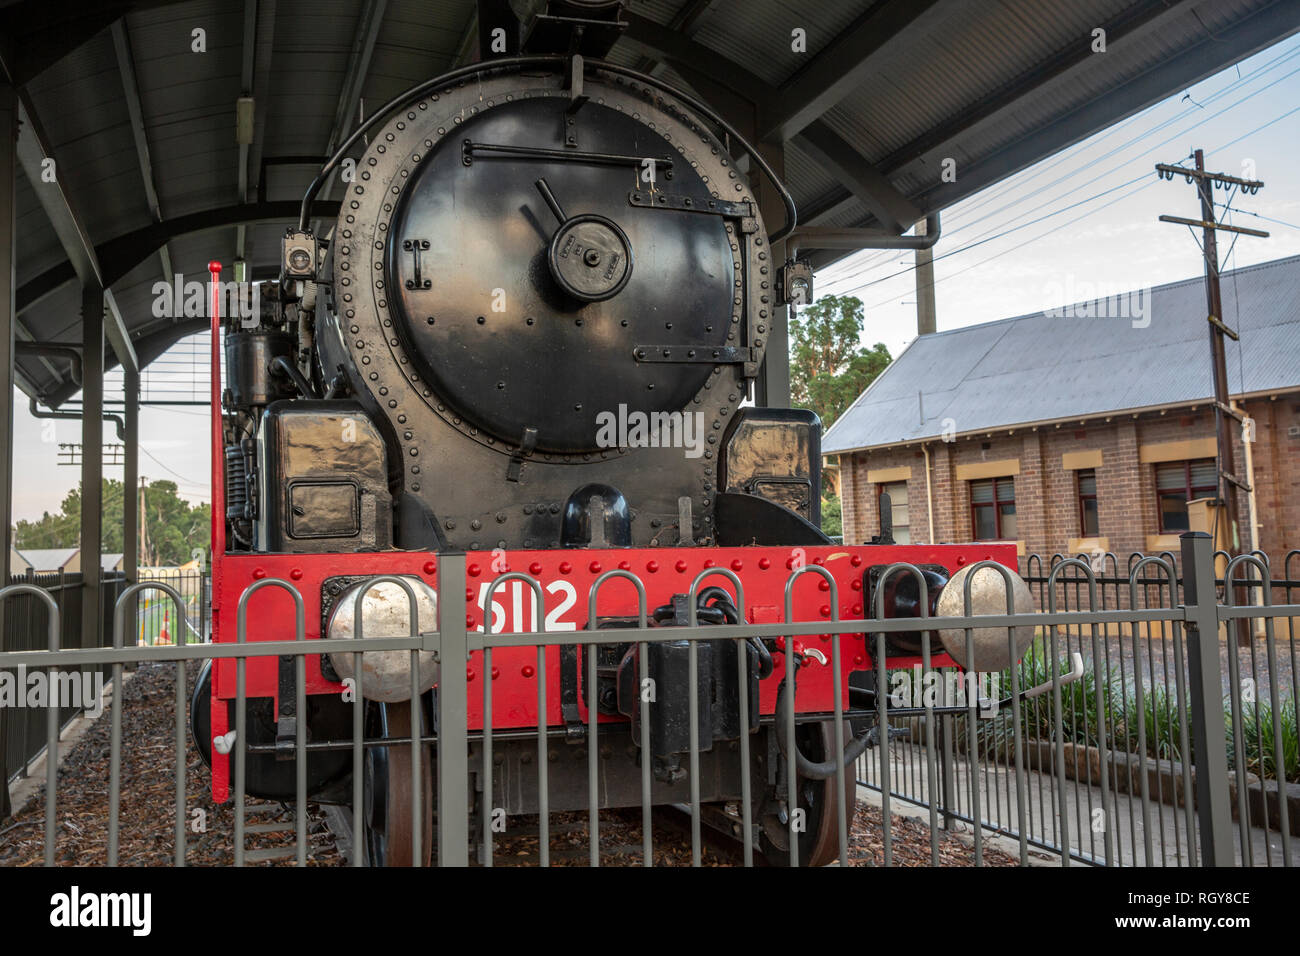 Chifley steam locomotive train engine on display at Bathurst railway station, New South Wales,Australia Stock Photo